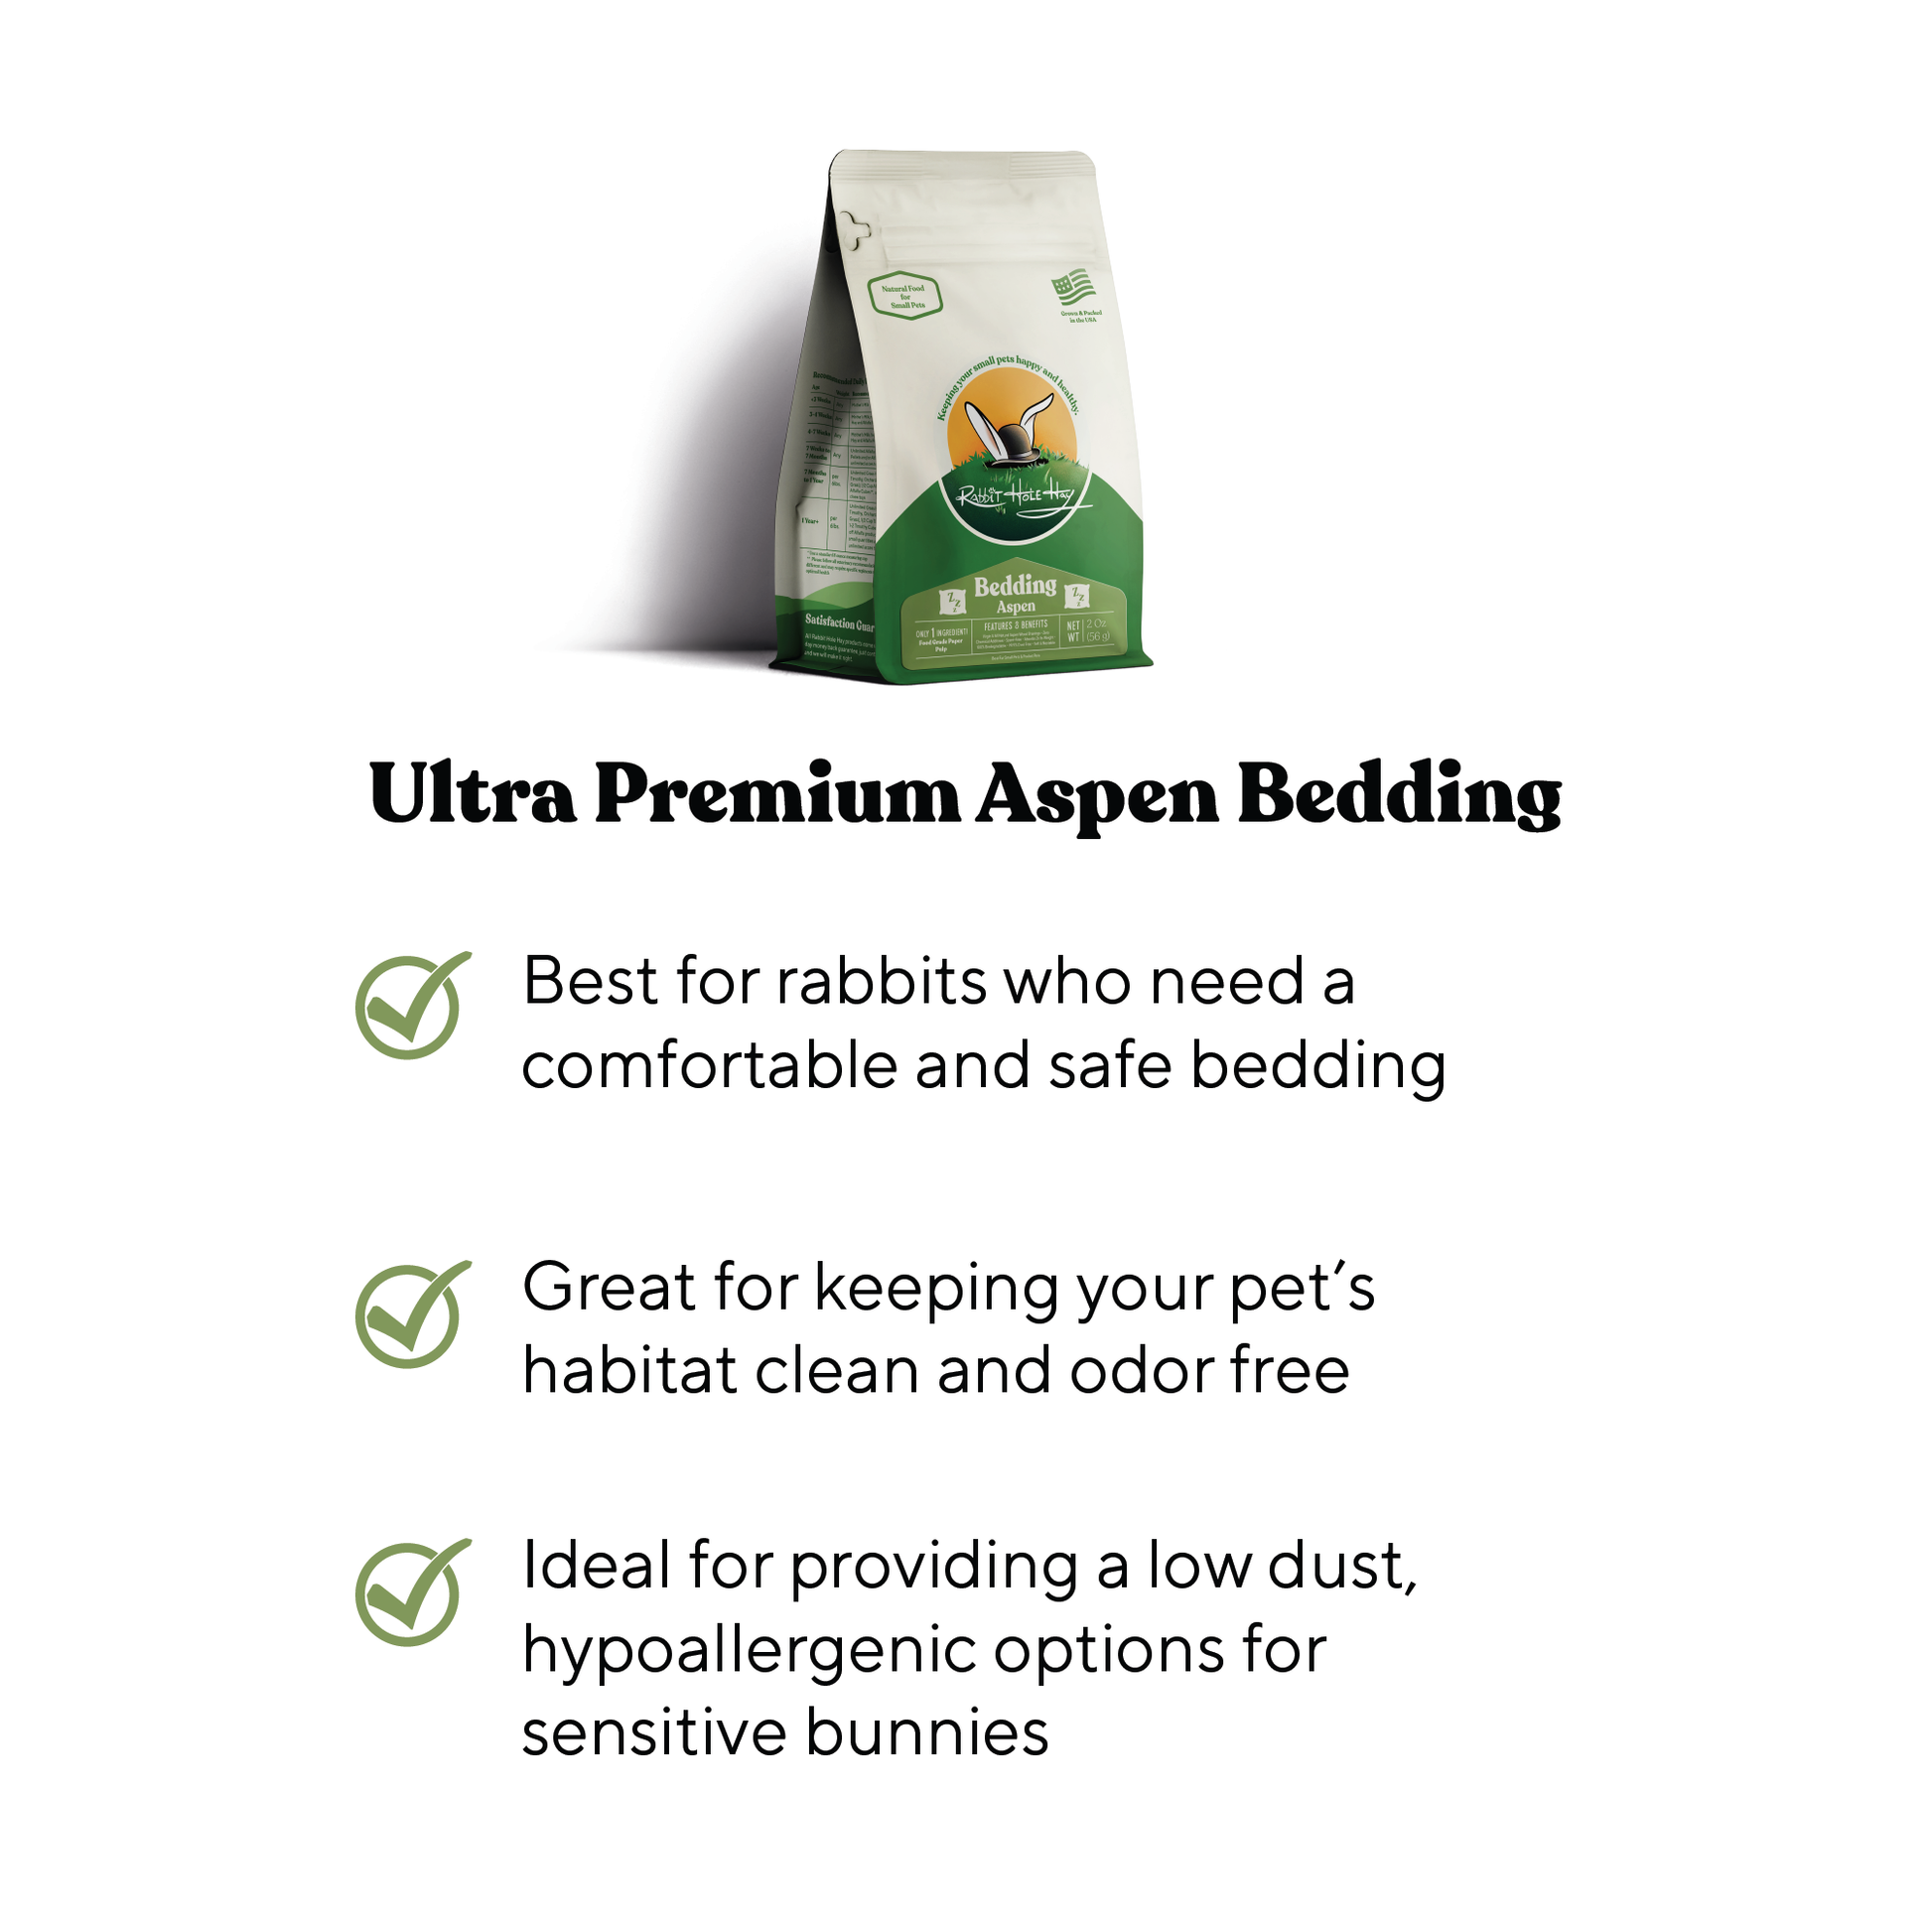 Ultra Premium Aspen Bedding - Benefits